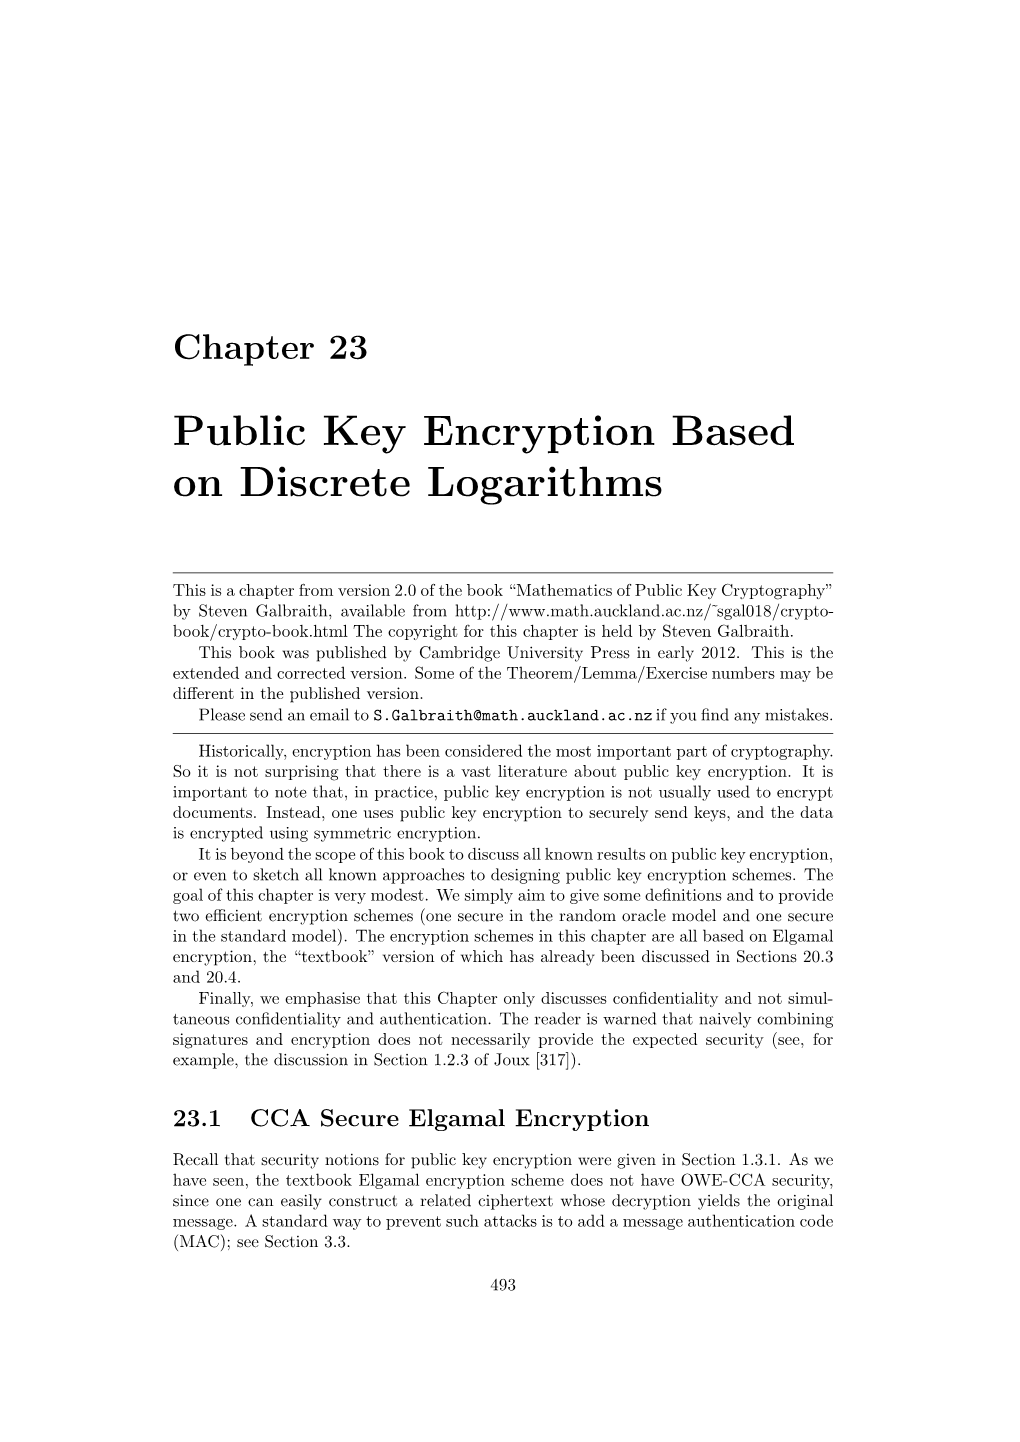 Public Key Encryption Based on Discrete Logarithms